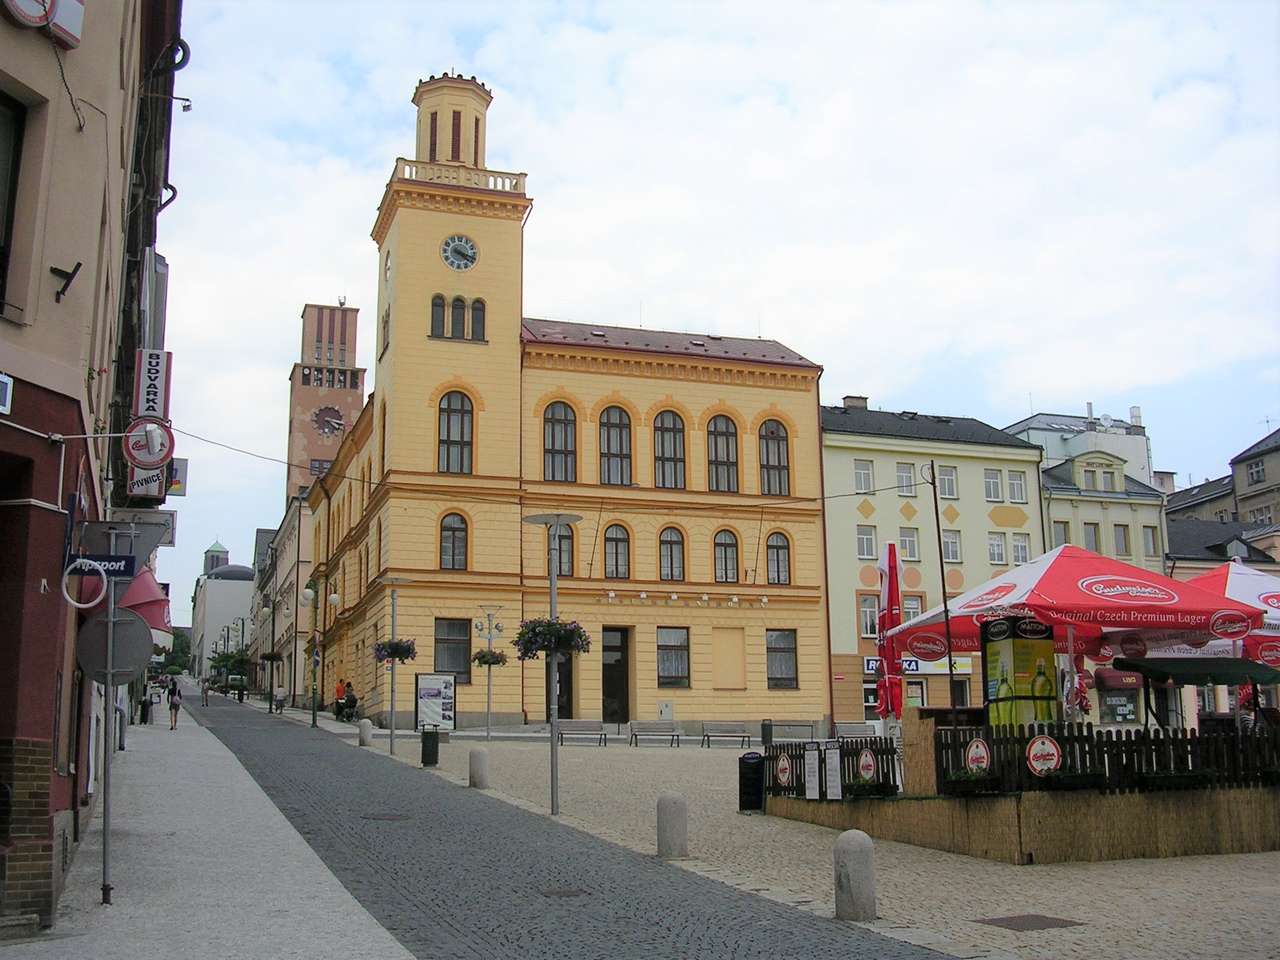 Jablonec stad in Tsjechië legpuzzel online